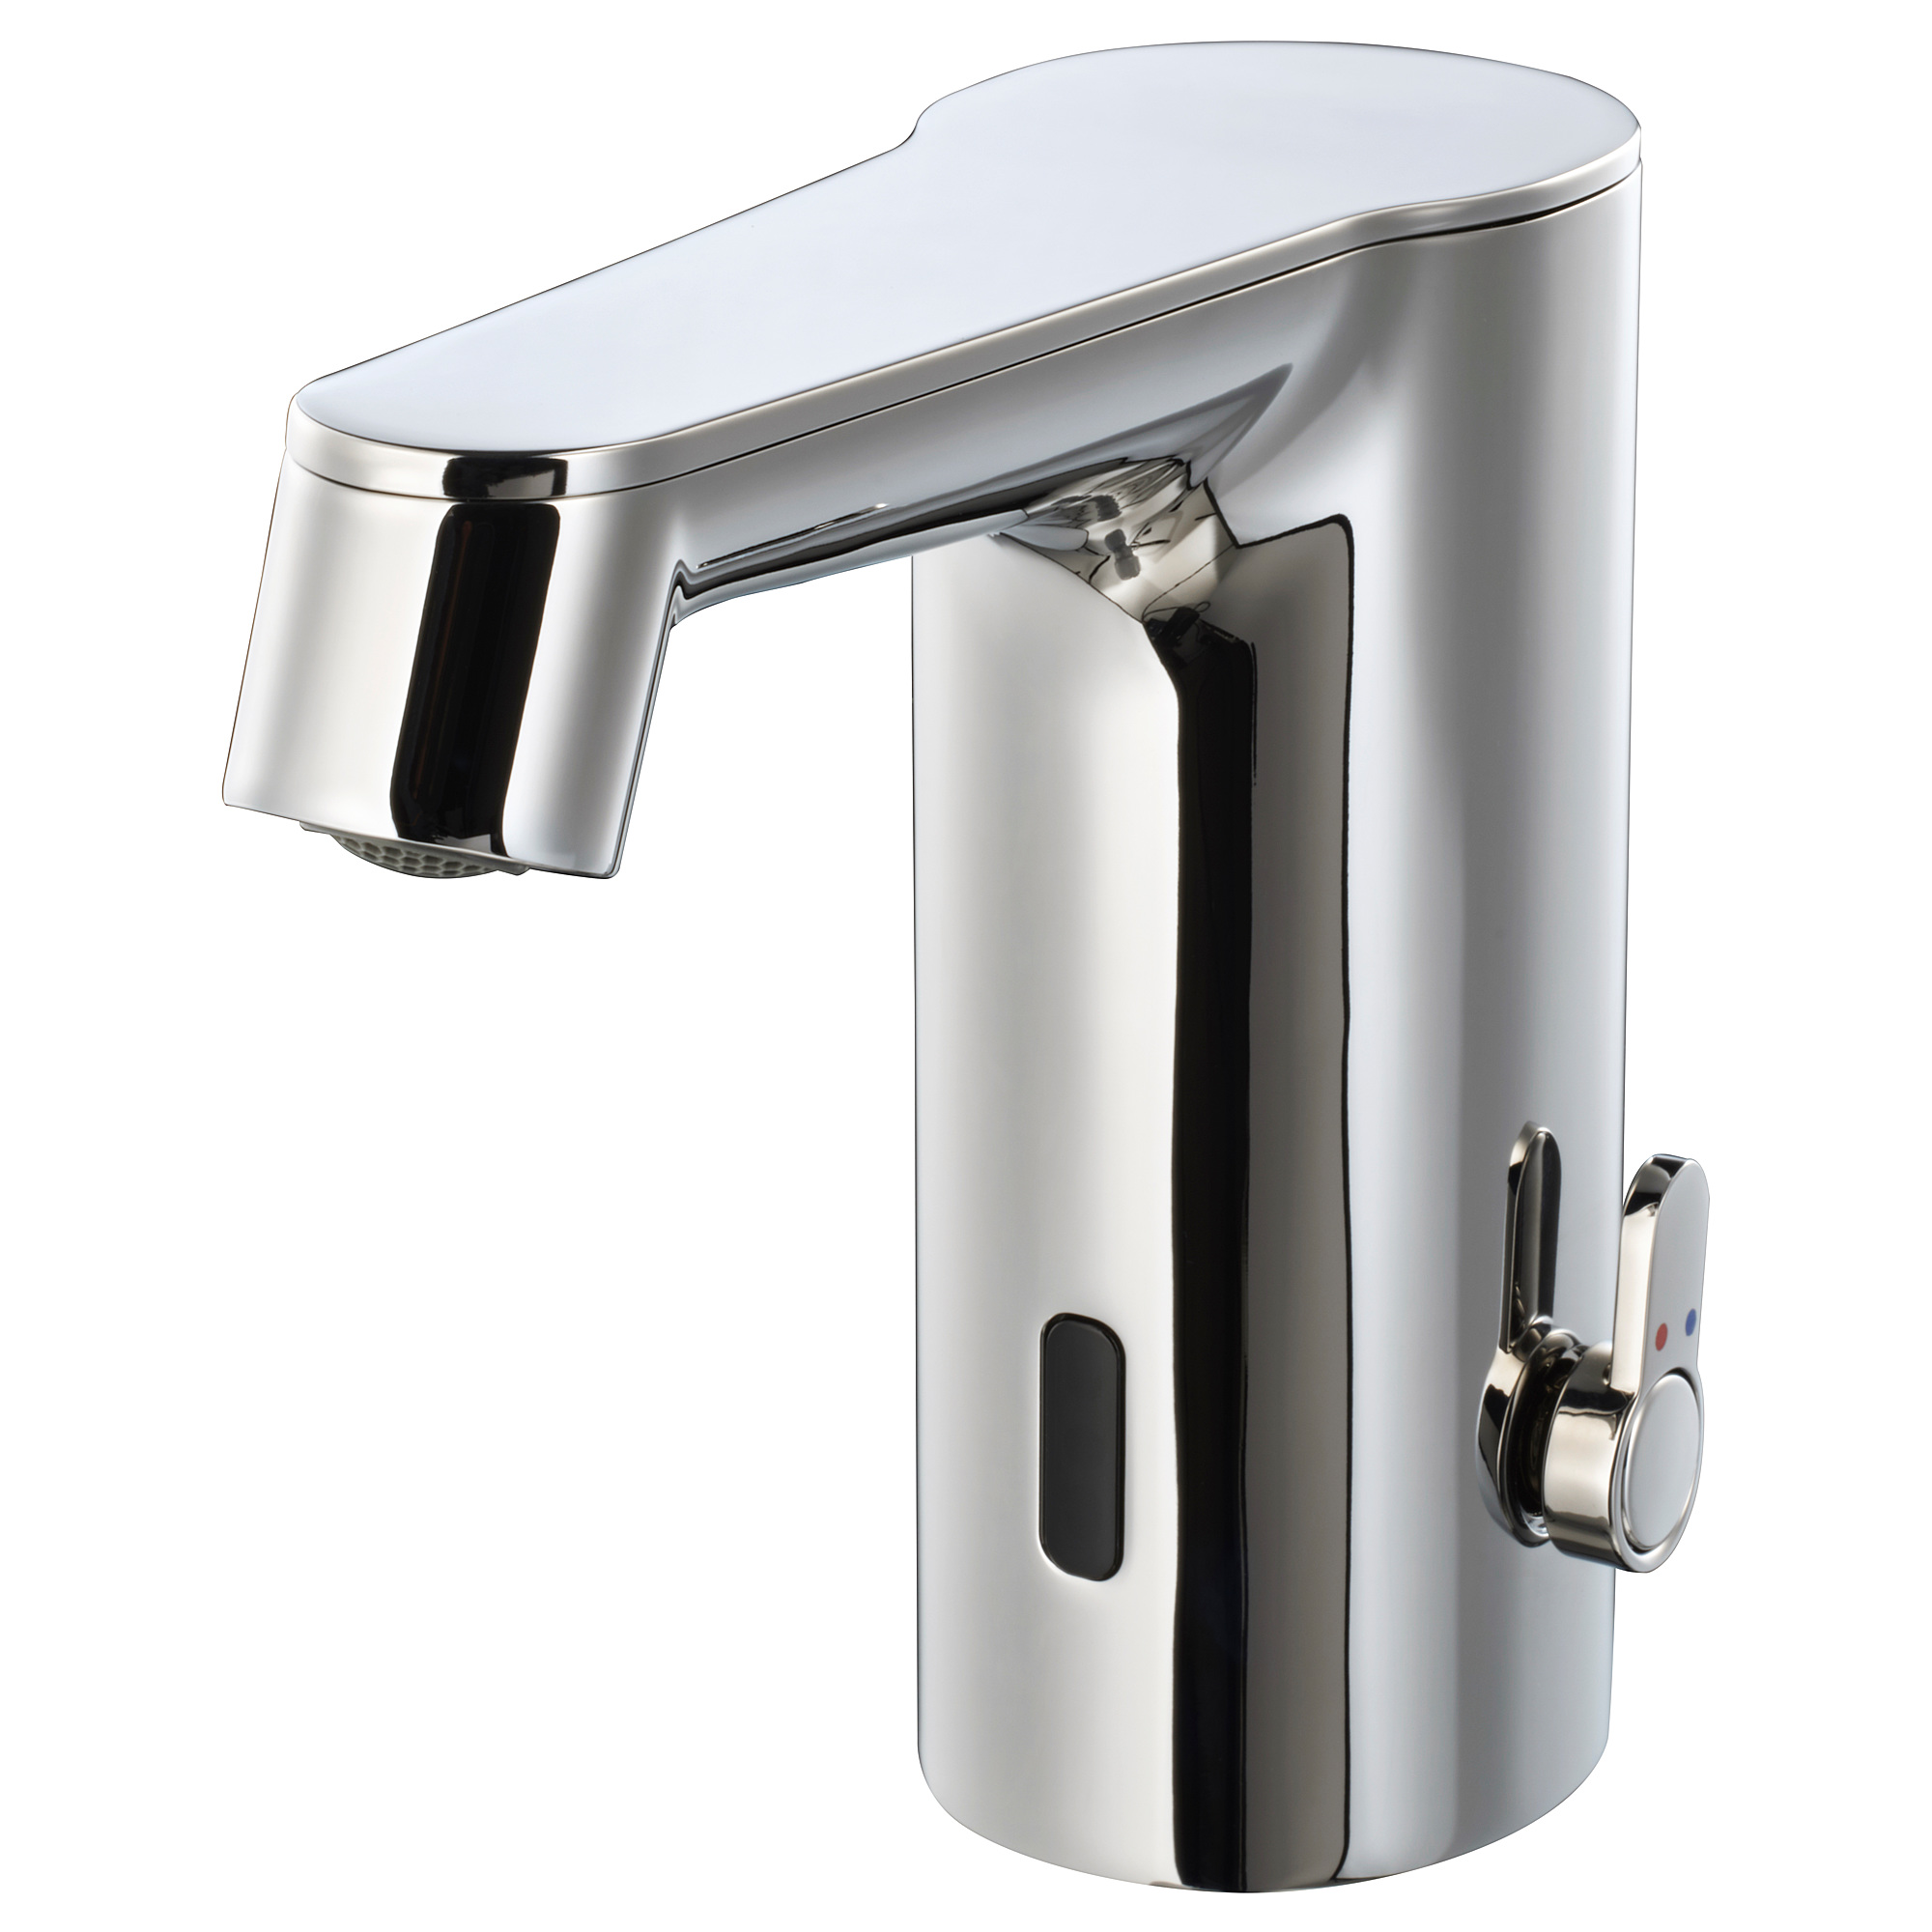 BROGRUND wash-basin mixer tap with sensor